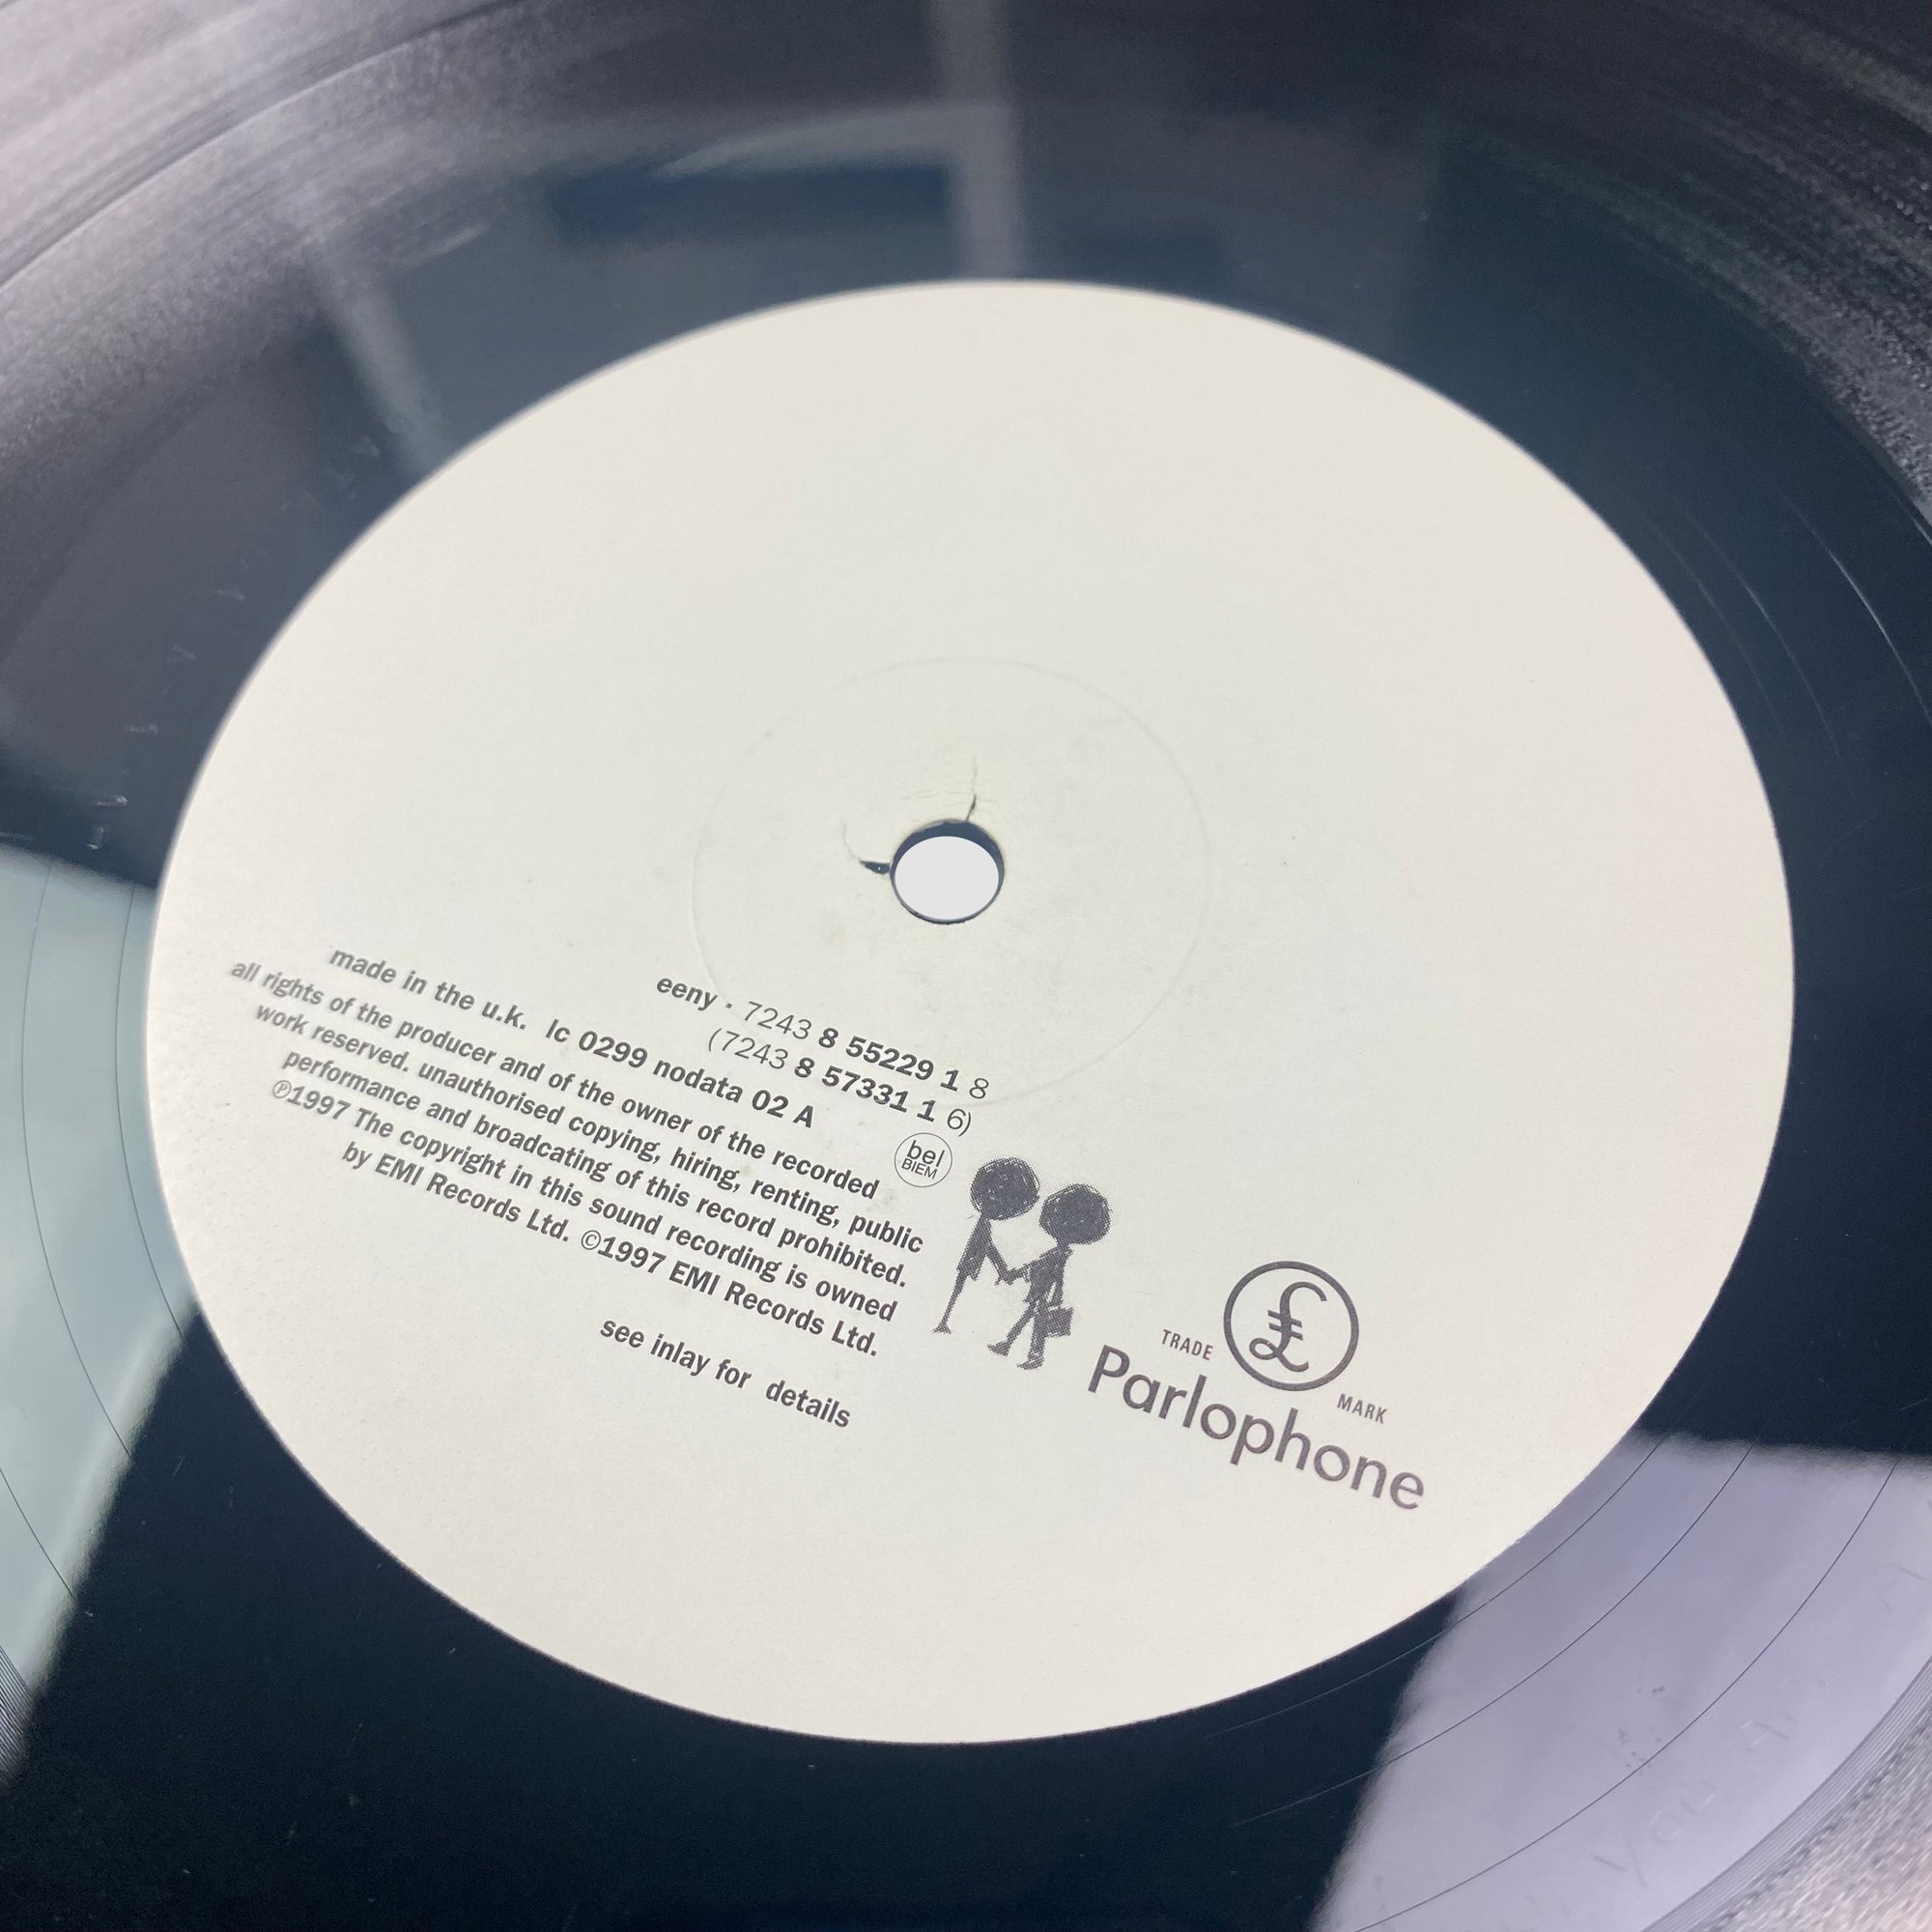 Radiohead OK Computer vinyl XL Recordings ‎– XLLP868